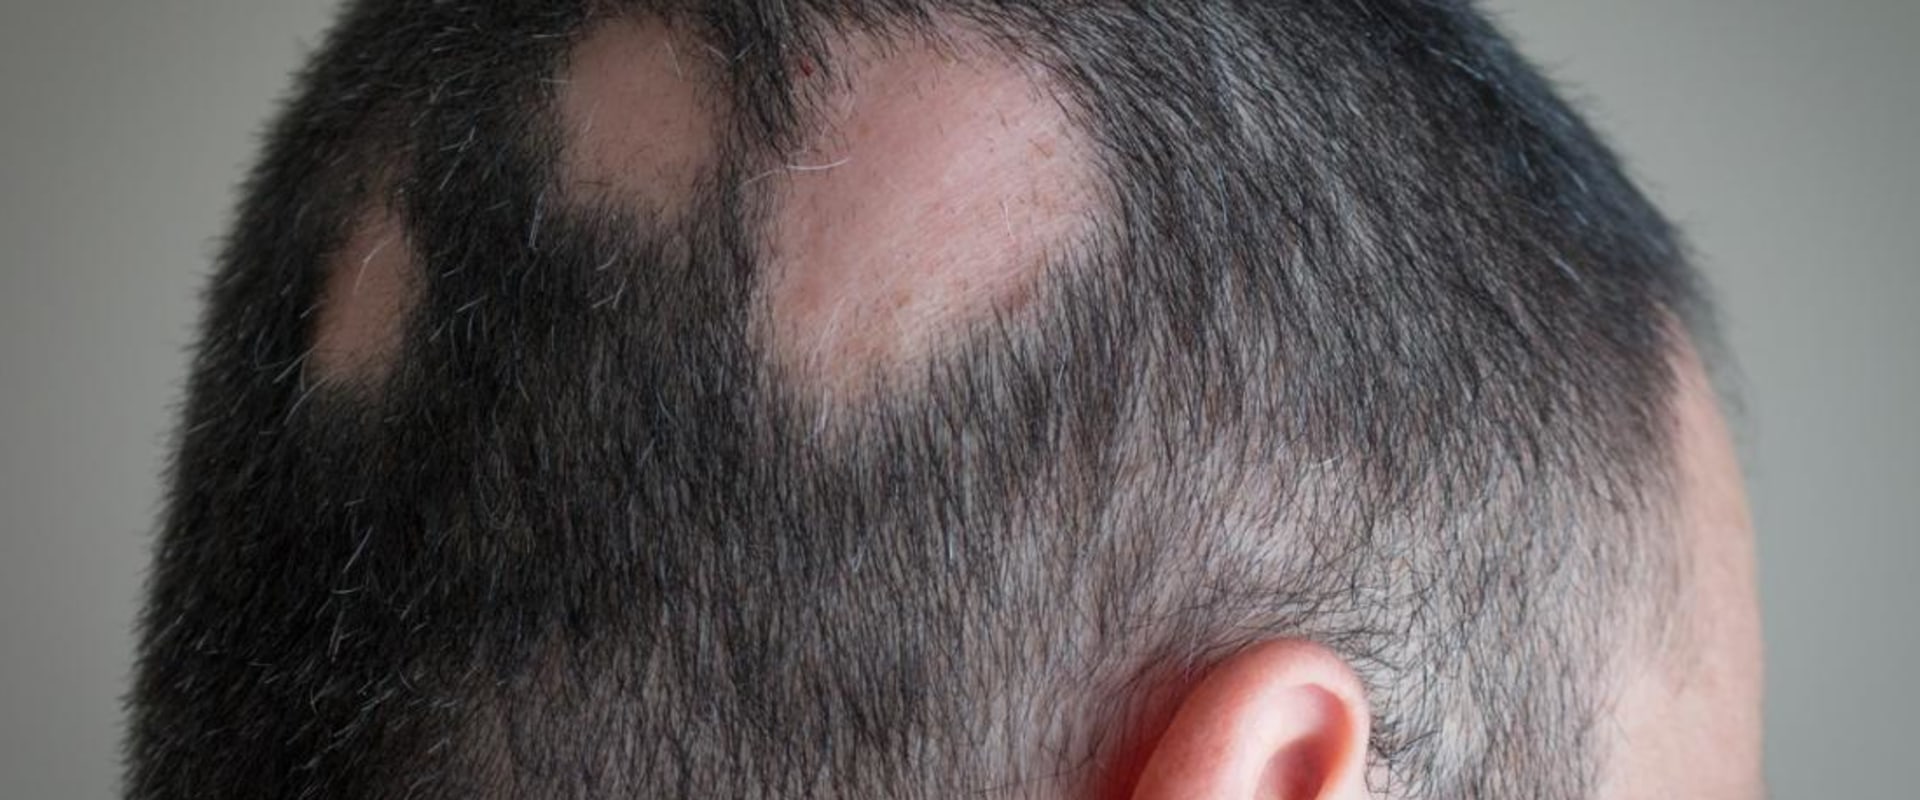 Alopecia: Causes, Symptoms, and Treatment